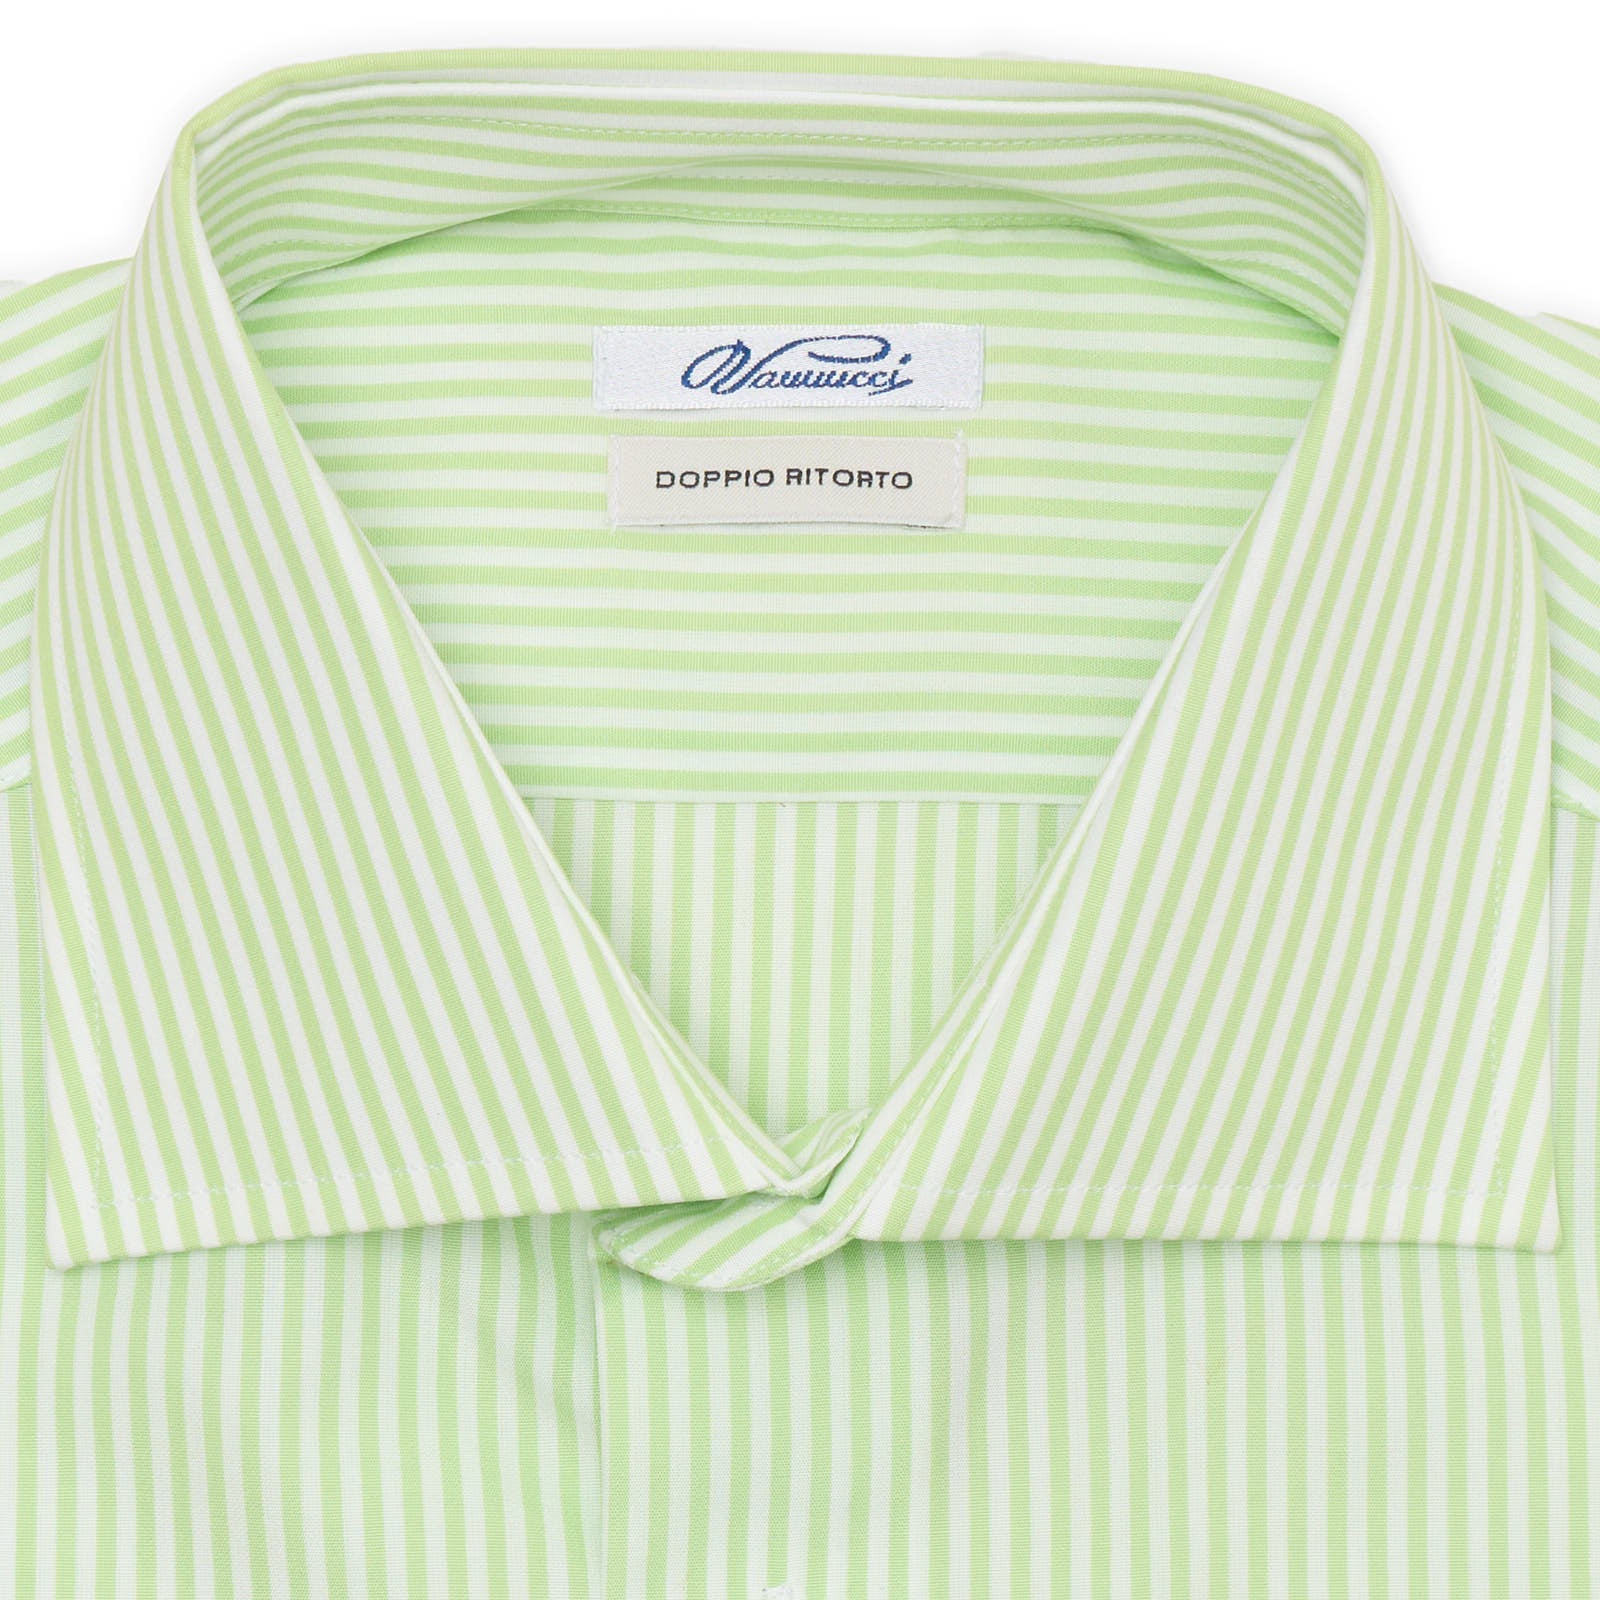 VANNUCCI Milano Green-White Cotton Poplin Dress Shirt EU 39 NEW US 15.5